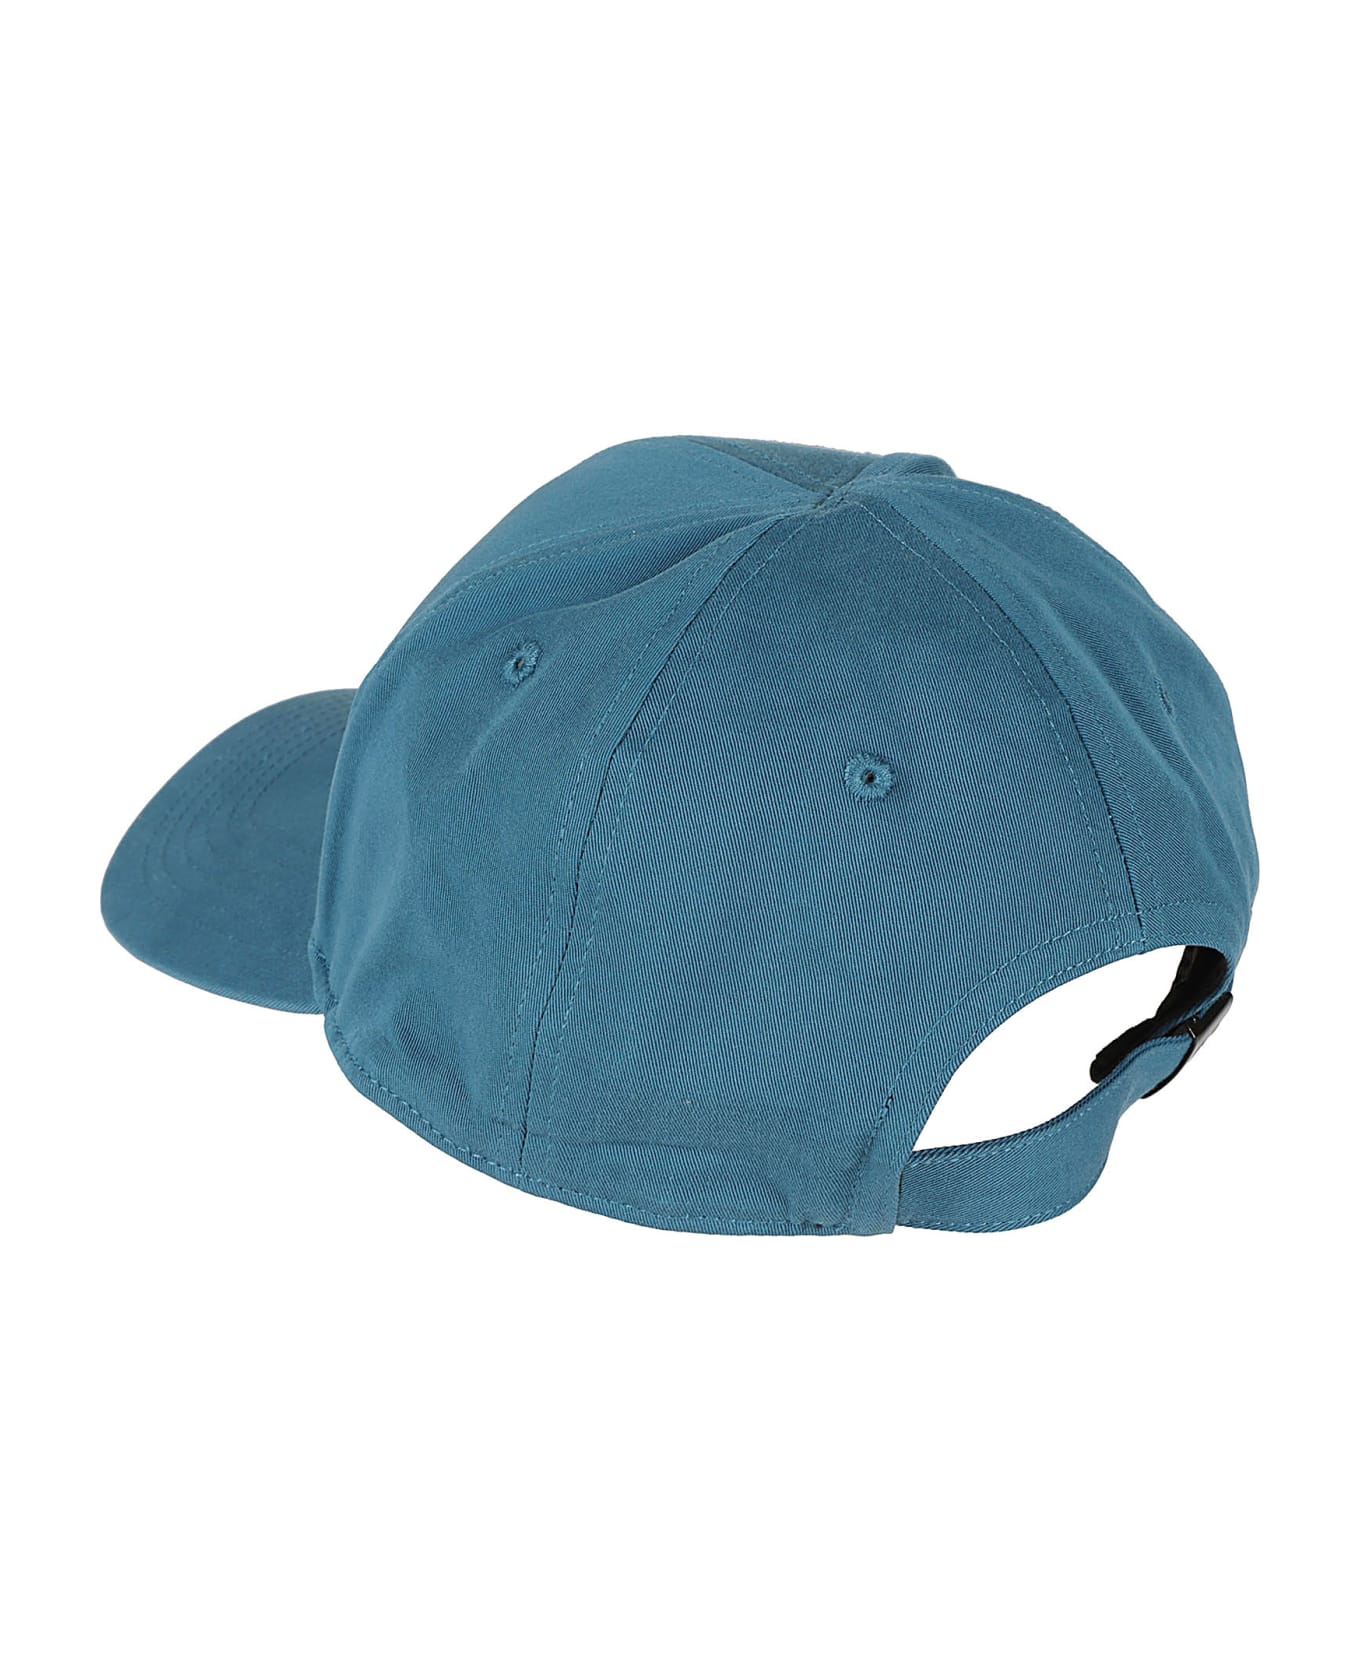 C.P. Company Gabardine Baseball Cap - Blu 帽子